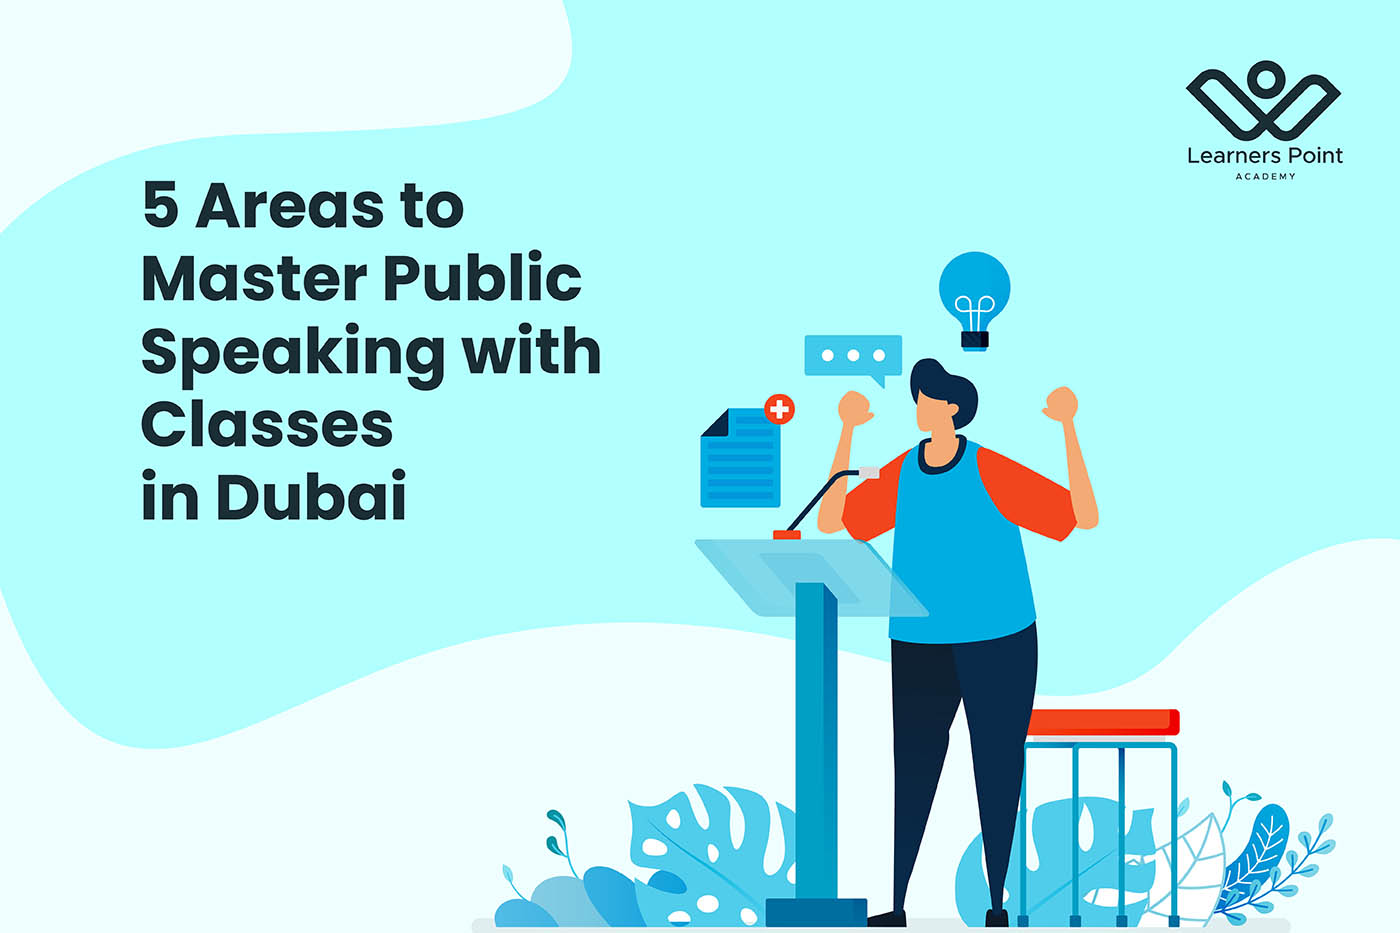 5 Areas to Master Public Speaking with Classes in Dubai